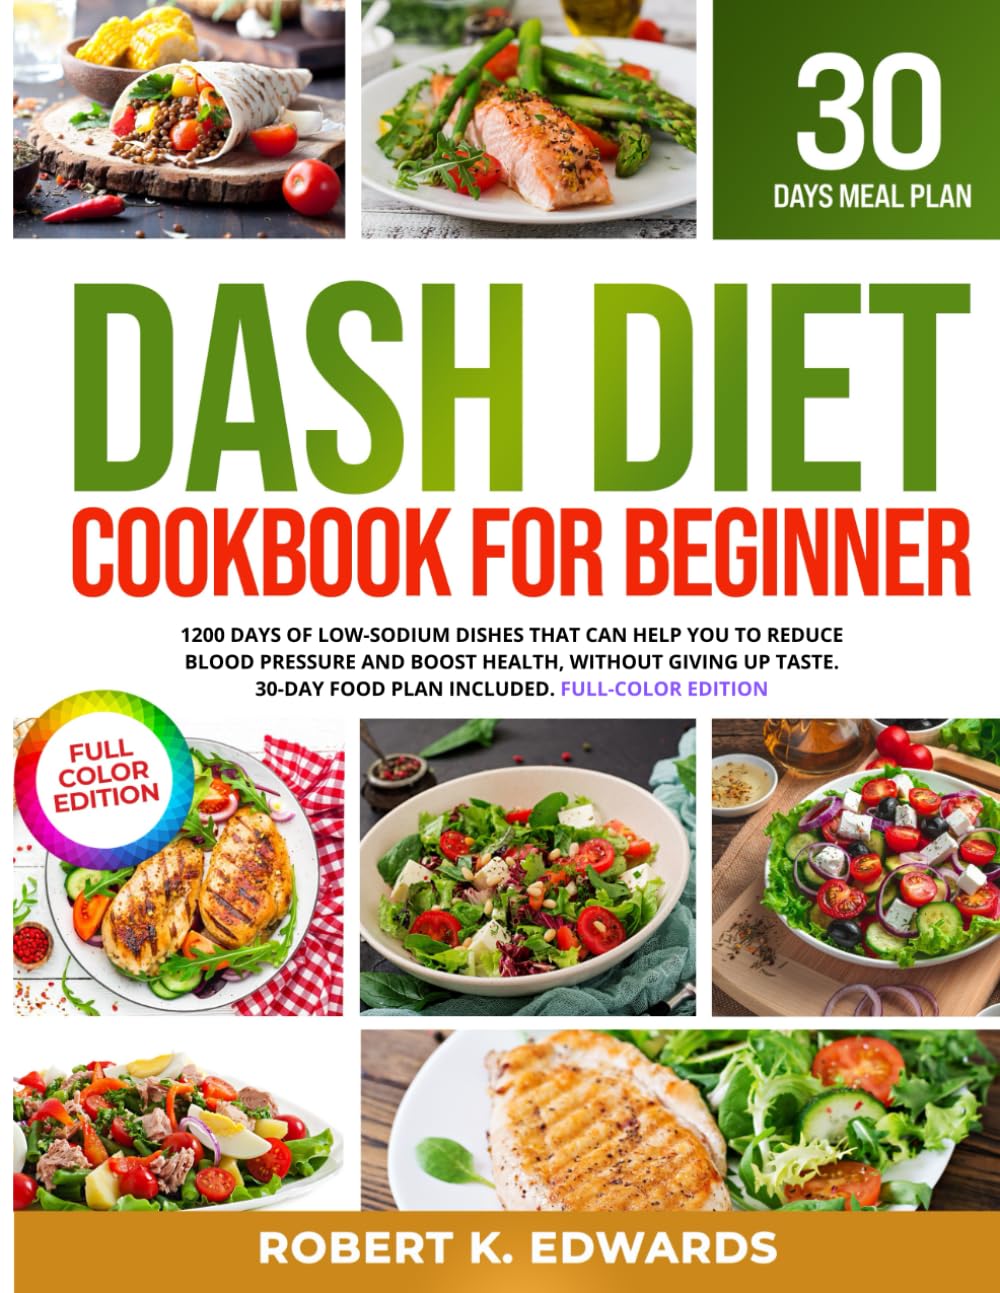 "Dash Diet Cookbook for Beginners"